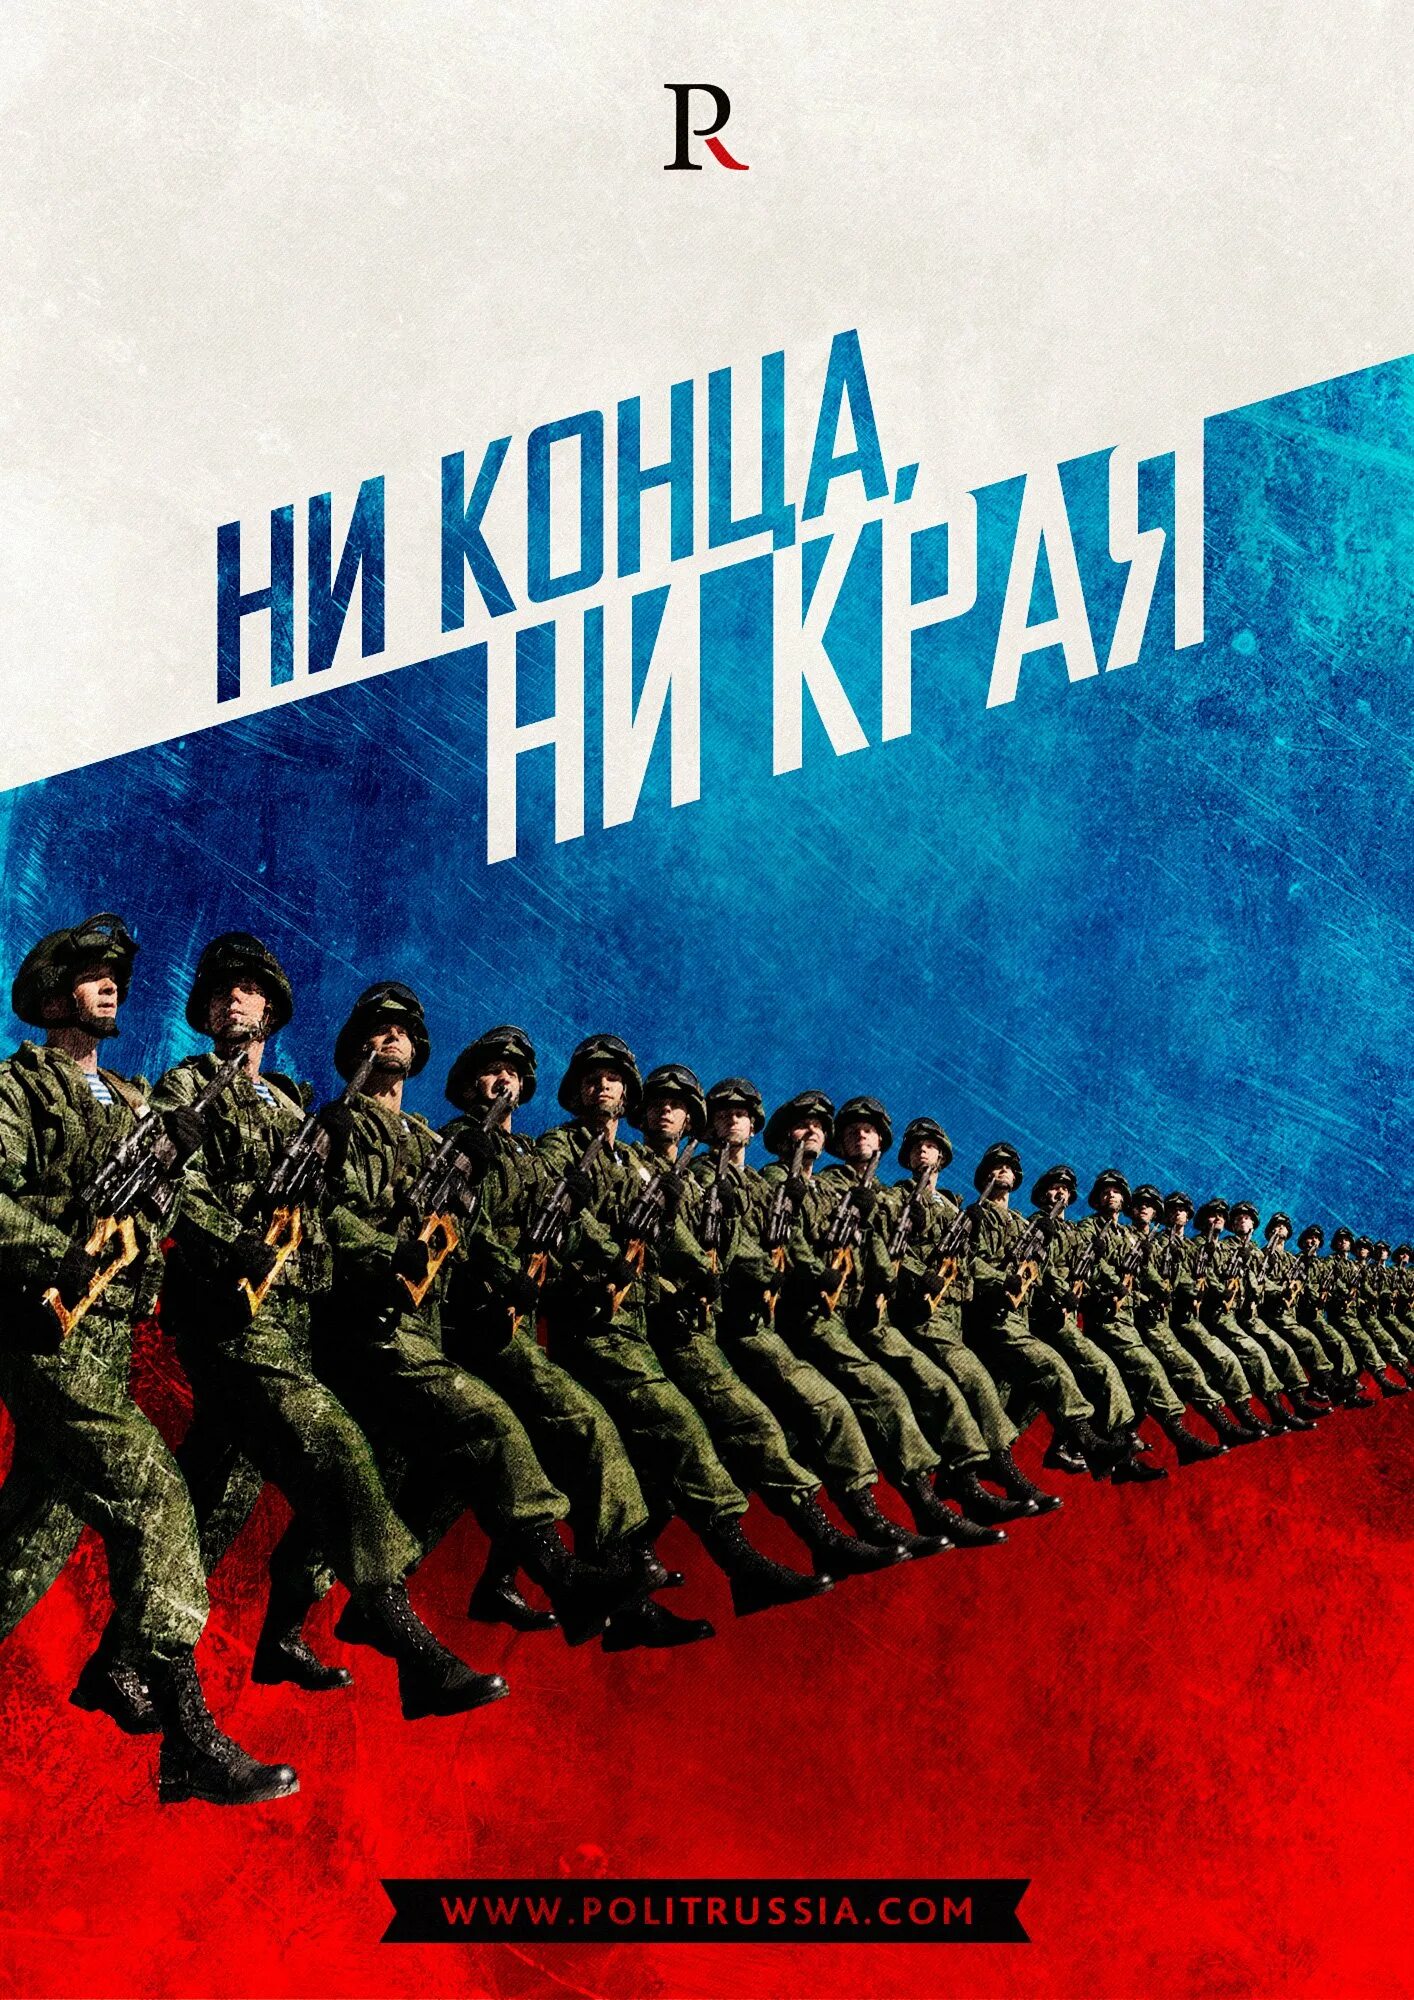 Плакат армия. Российская армия Постер. Плакакат Российской армии. Армия России плакат. Армейская реклама